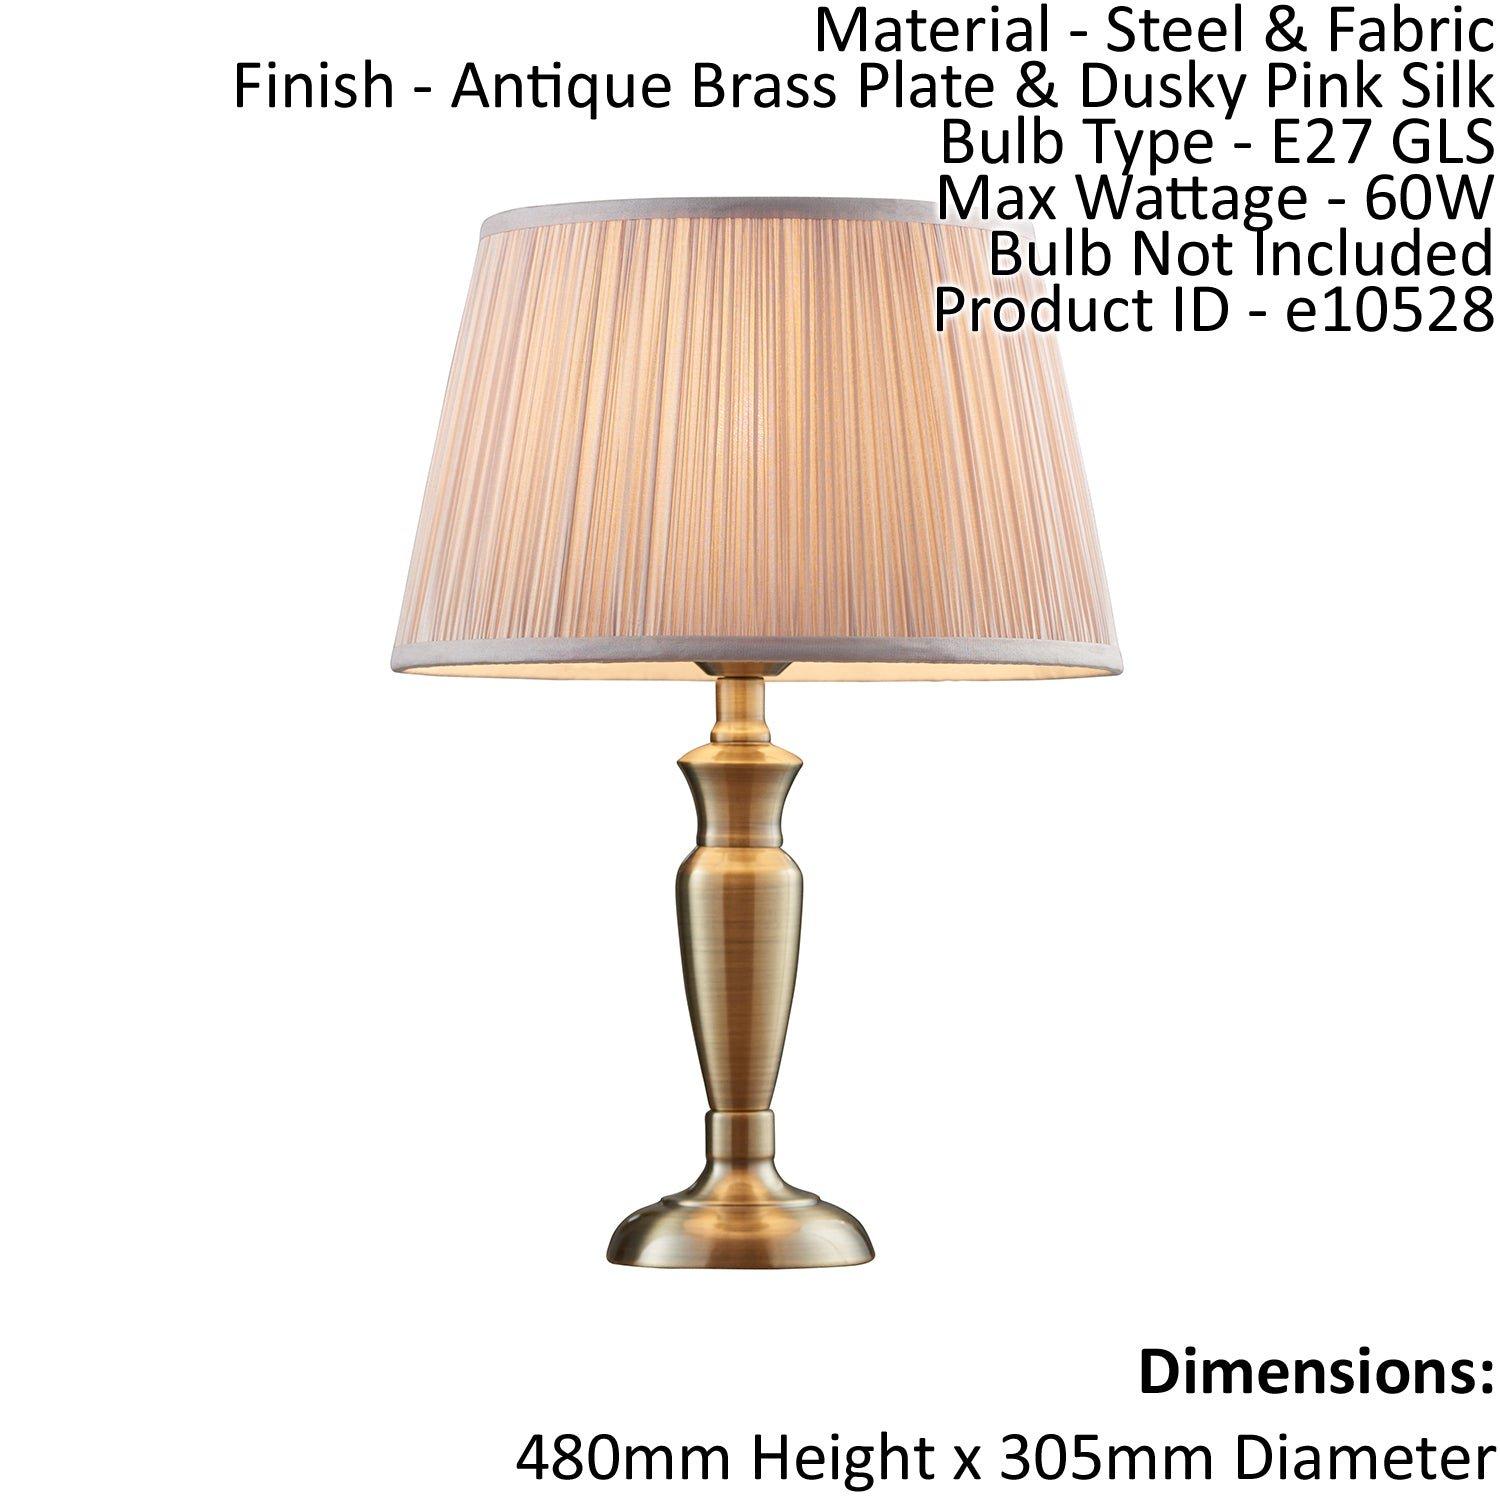 Table Lamp Antique Brass & Dusky Pink Silk 60W E27 Base & Shade e10528